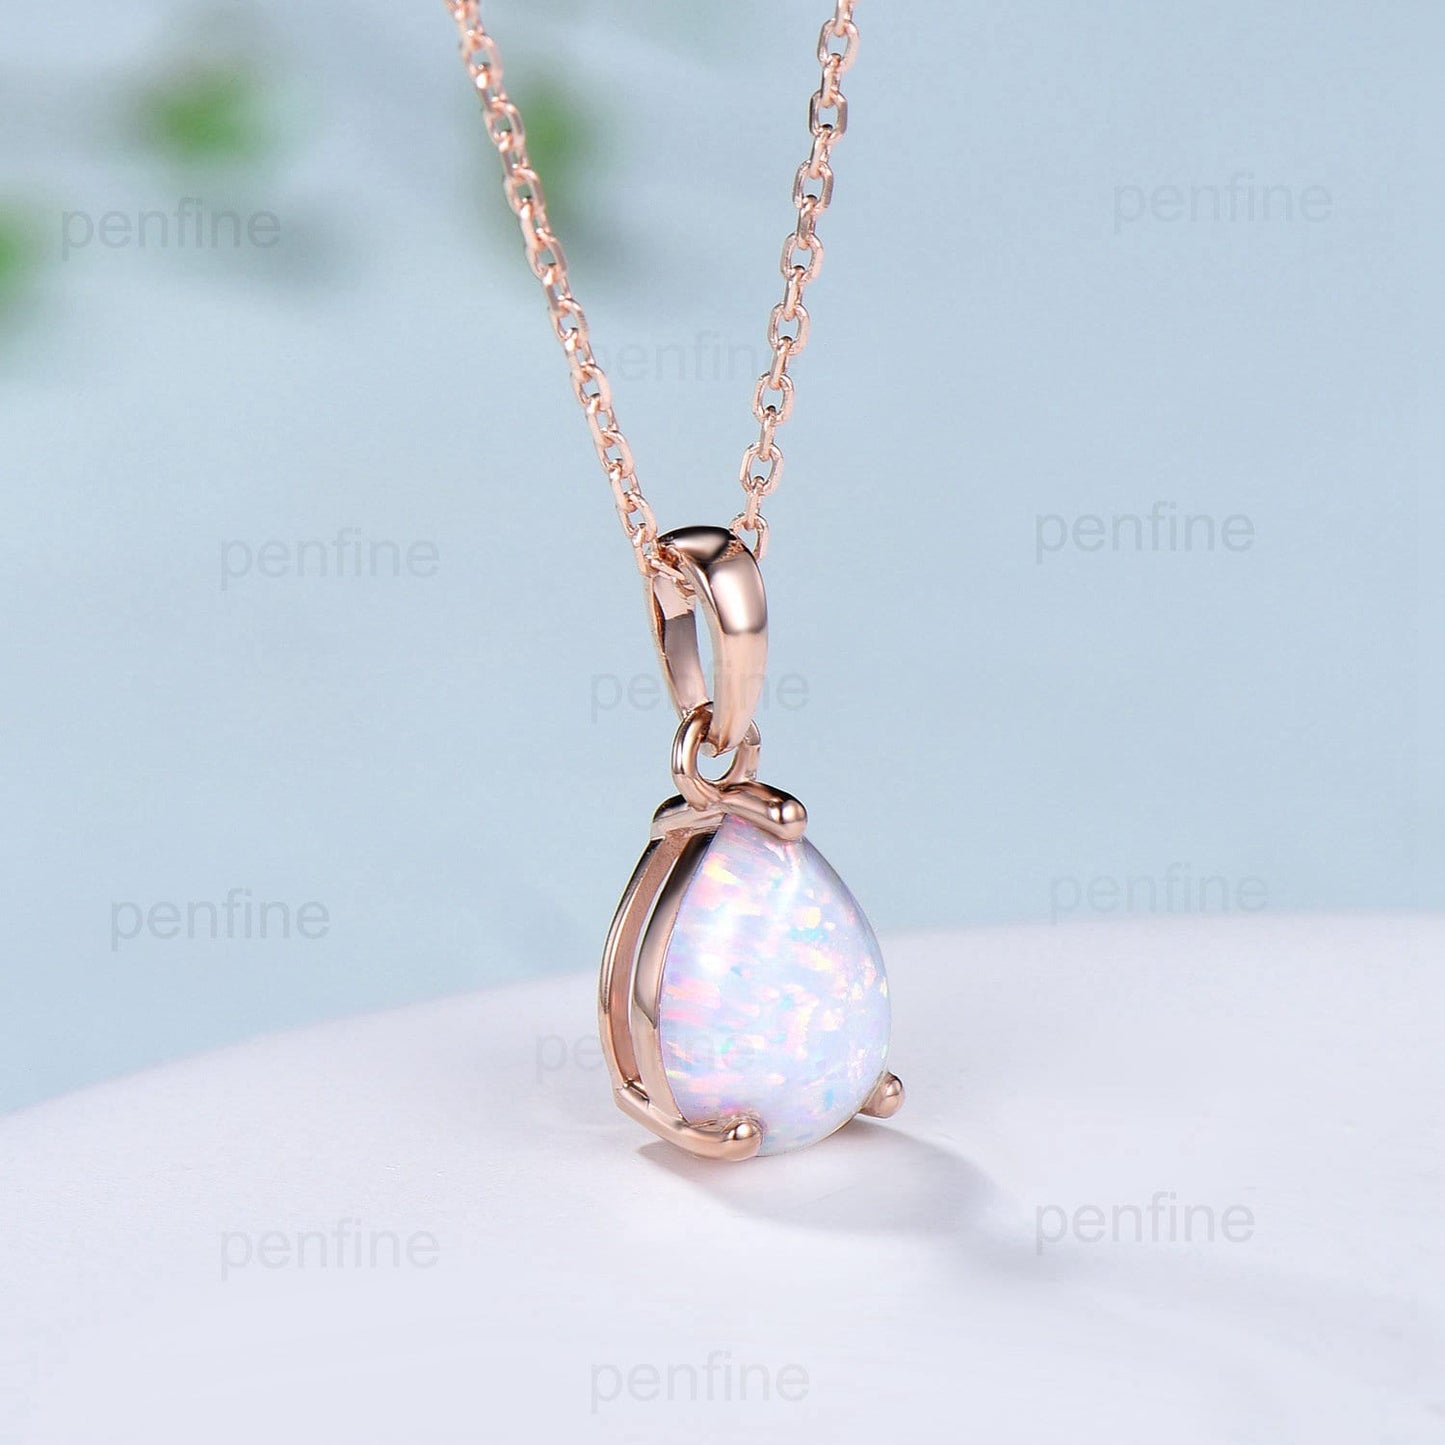 Dainty fire opal pendant necklace solitaire white opal pendant 14k/18k rose gold minimalist October birthstone pendant necklace for women - PENFINE